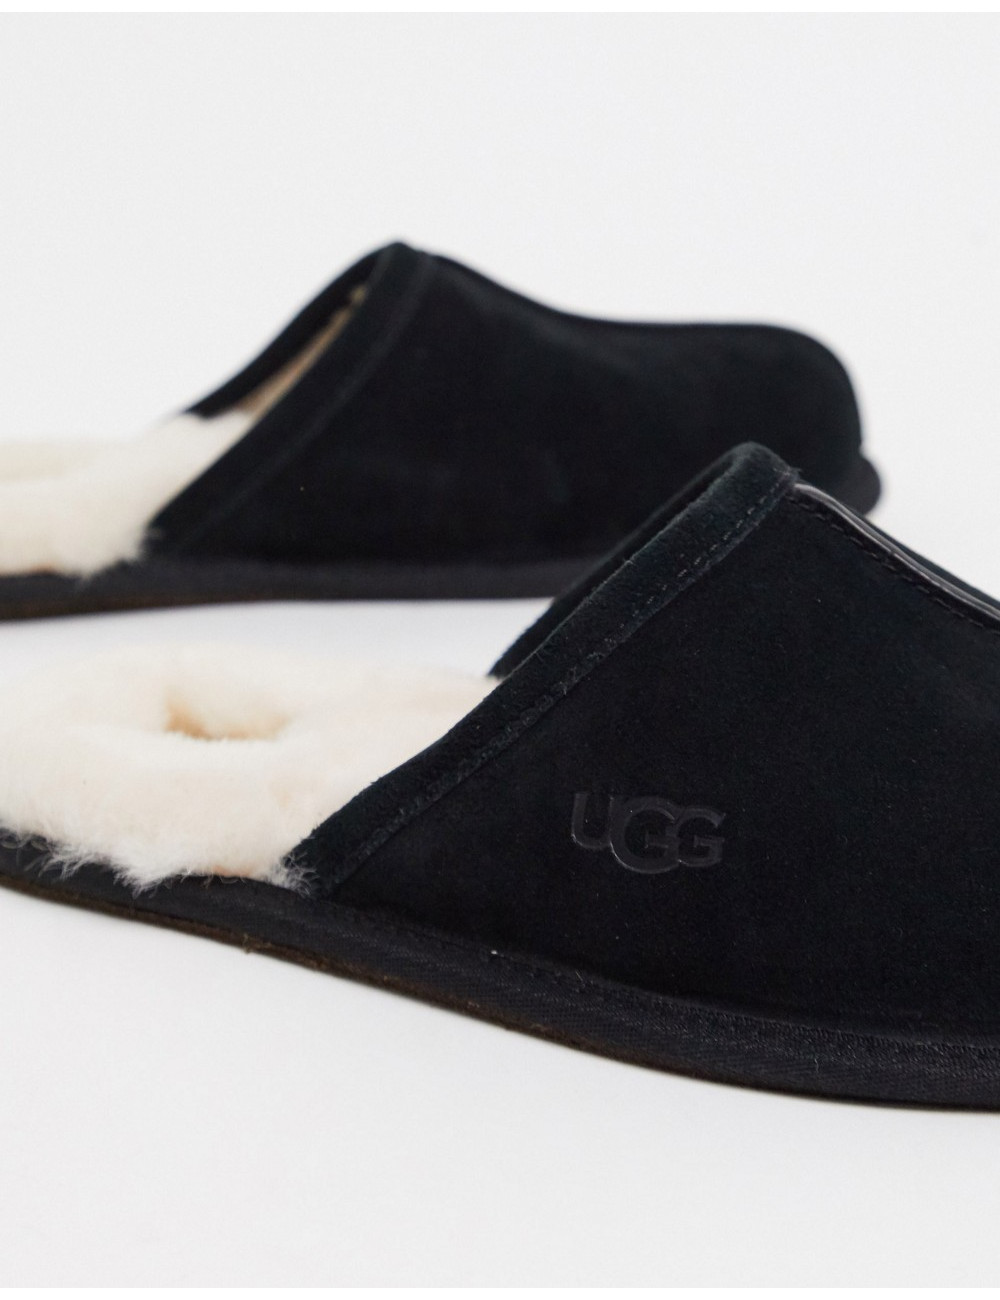 UGG scuff slippers in black...